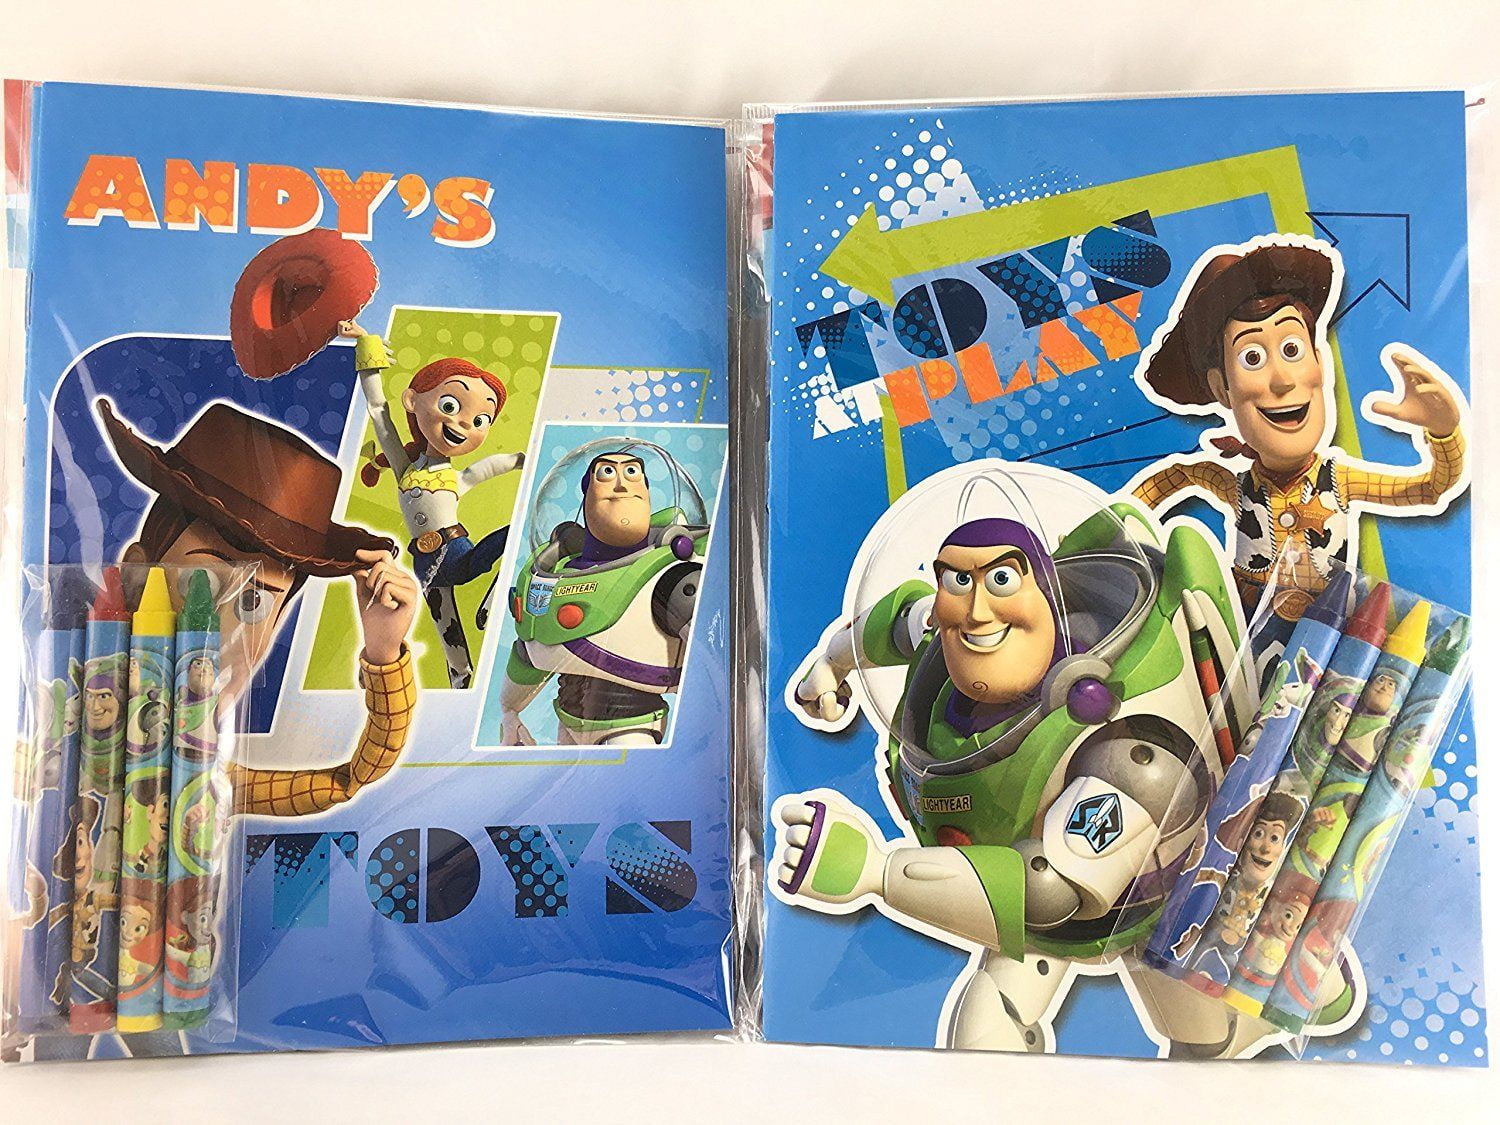 48 Toy Story 3 Disney Pixar Coloring Book & Crayon Set Child Party Bag Fillers 